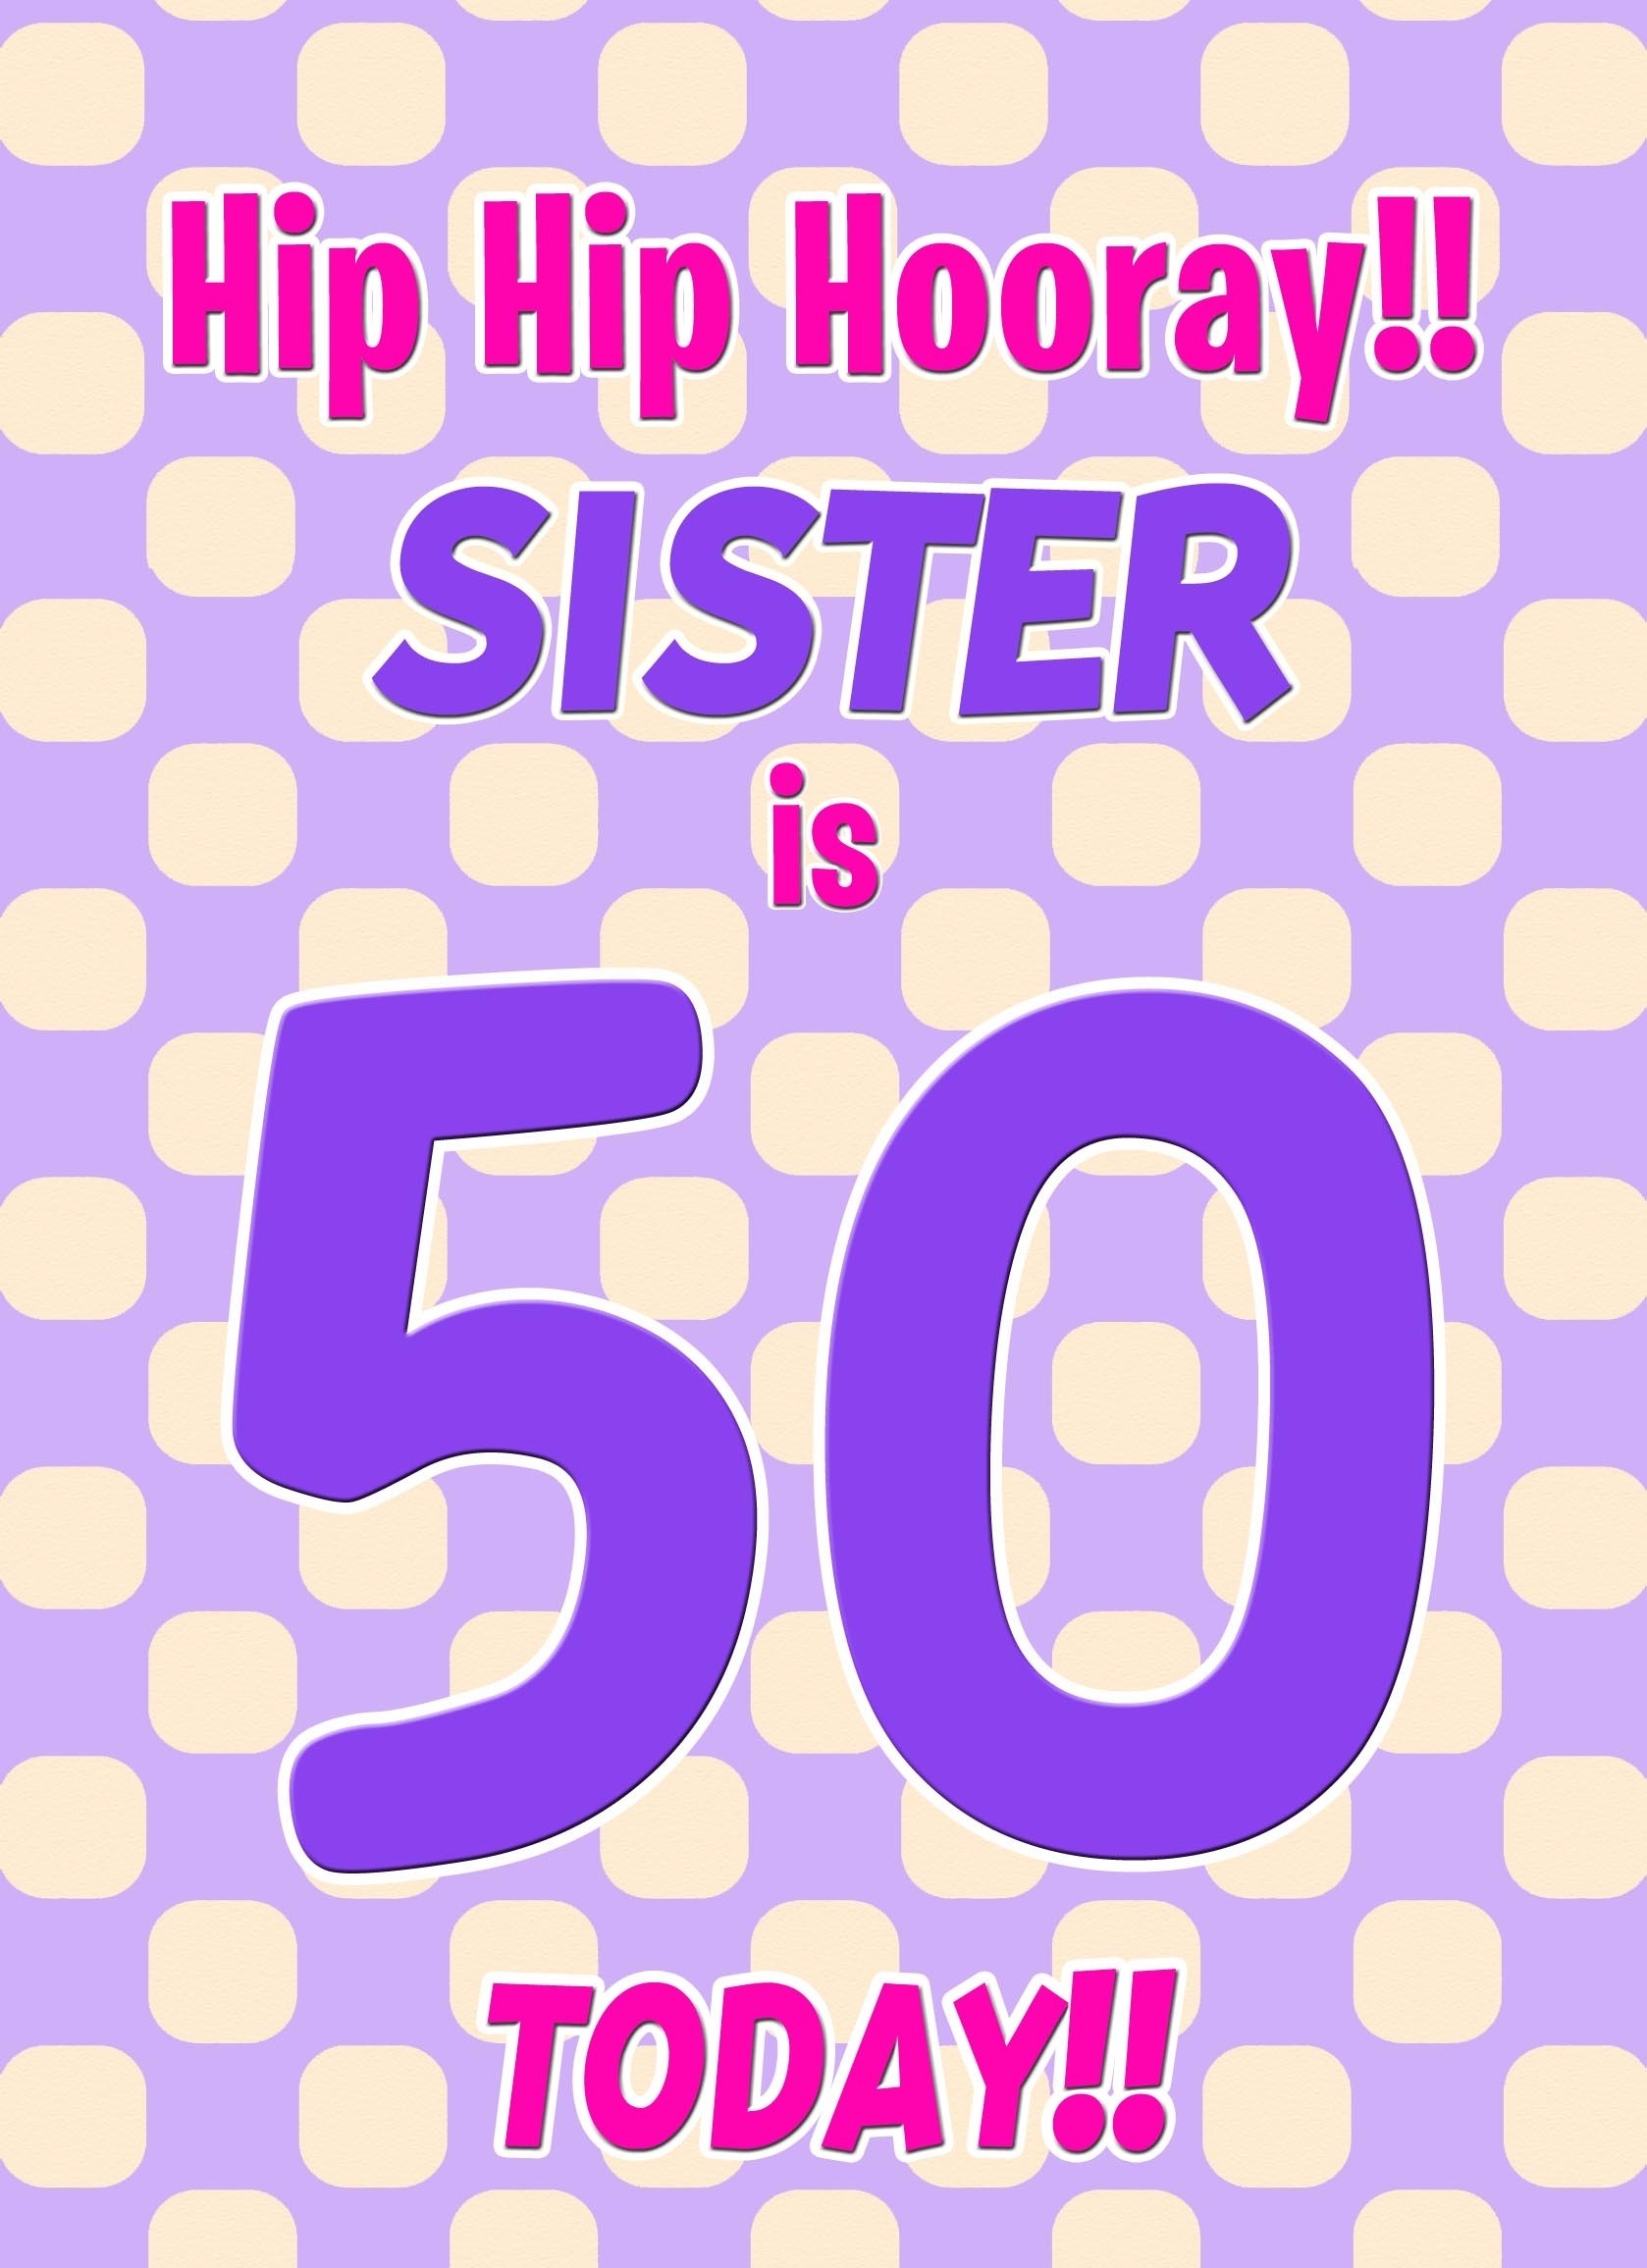 Sister 50th Birthday Card (Purple Spots)